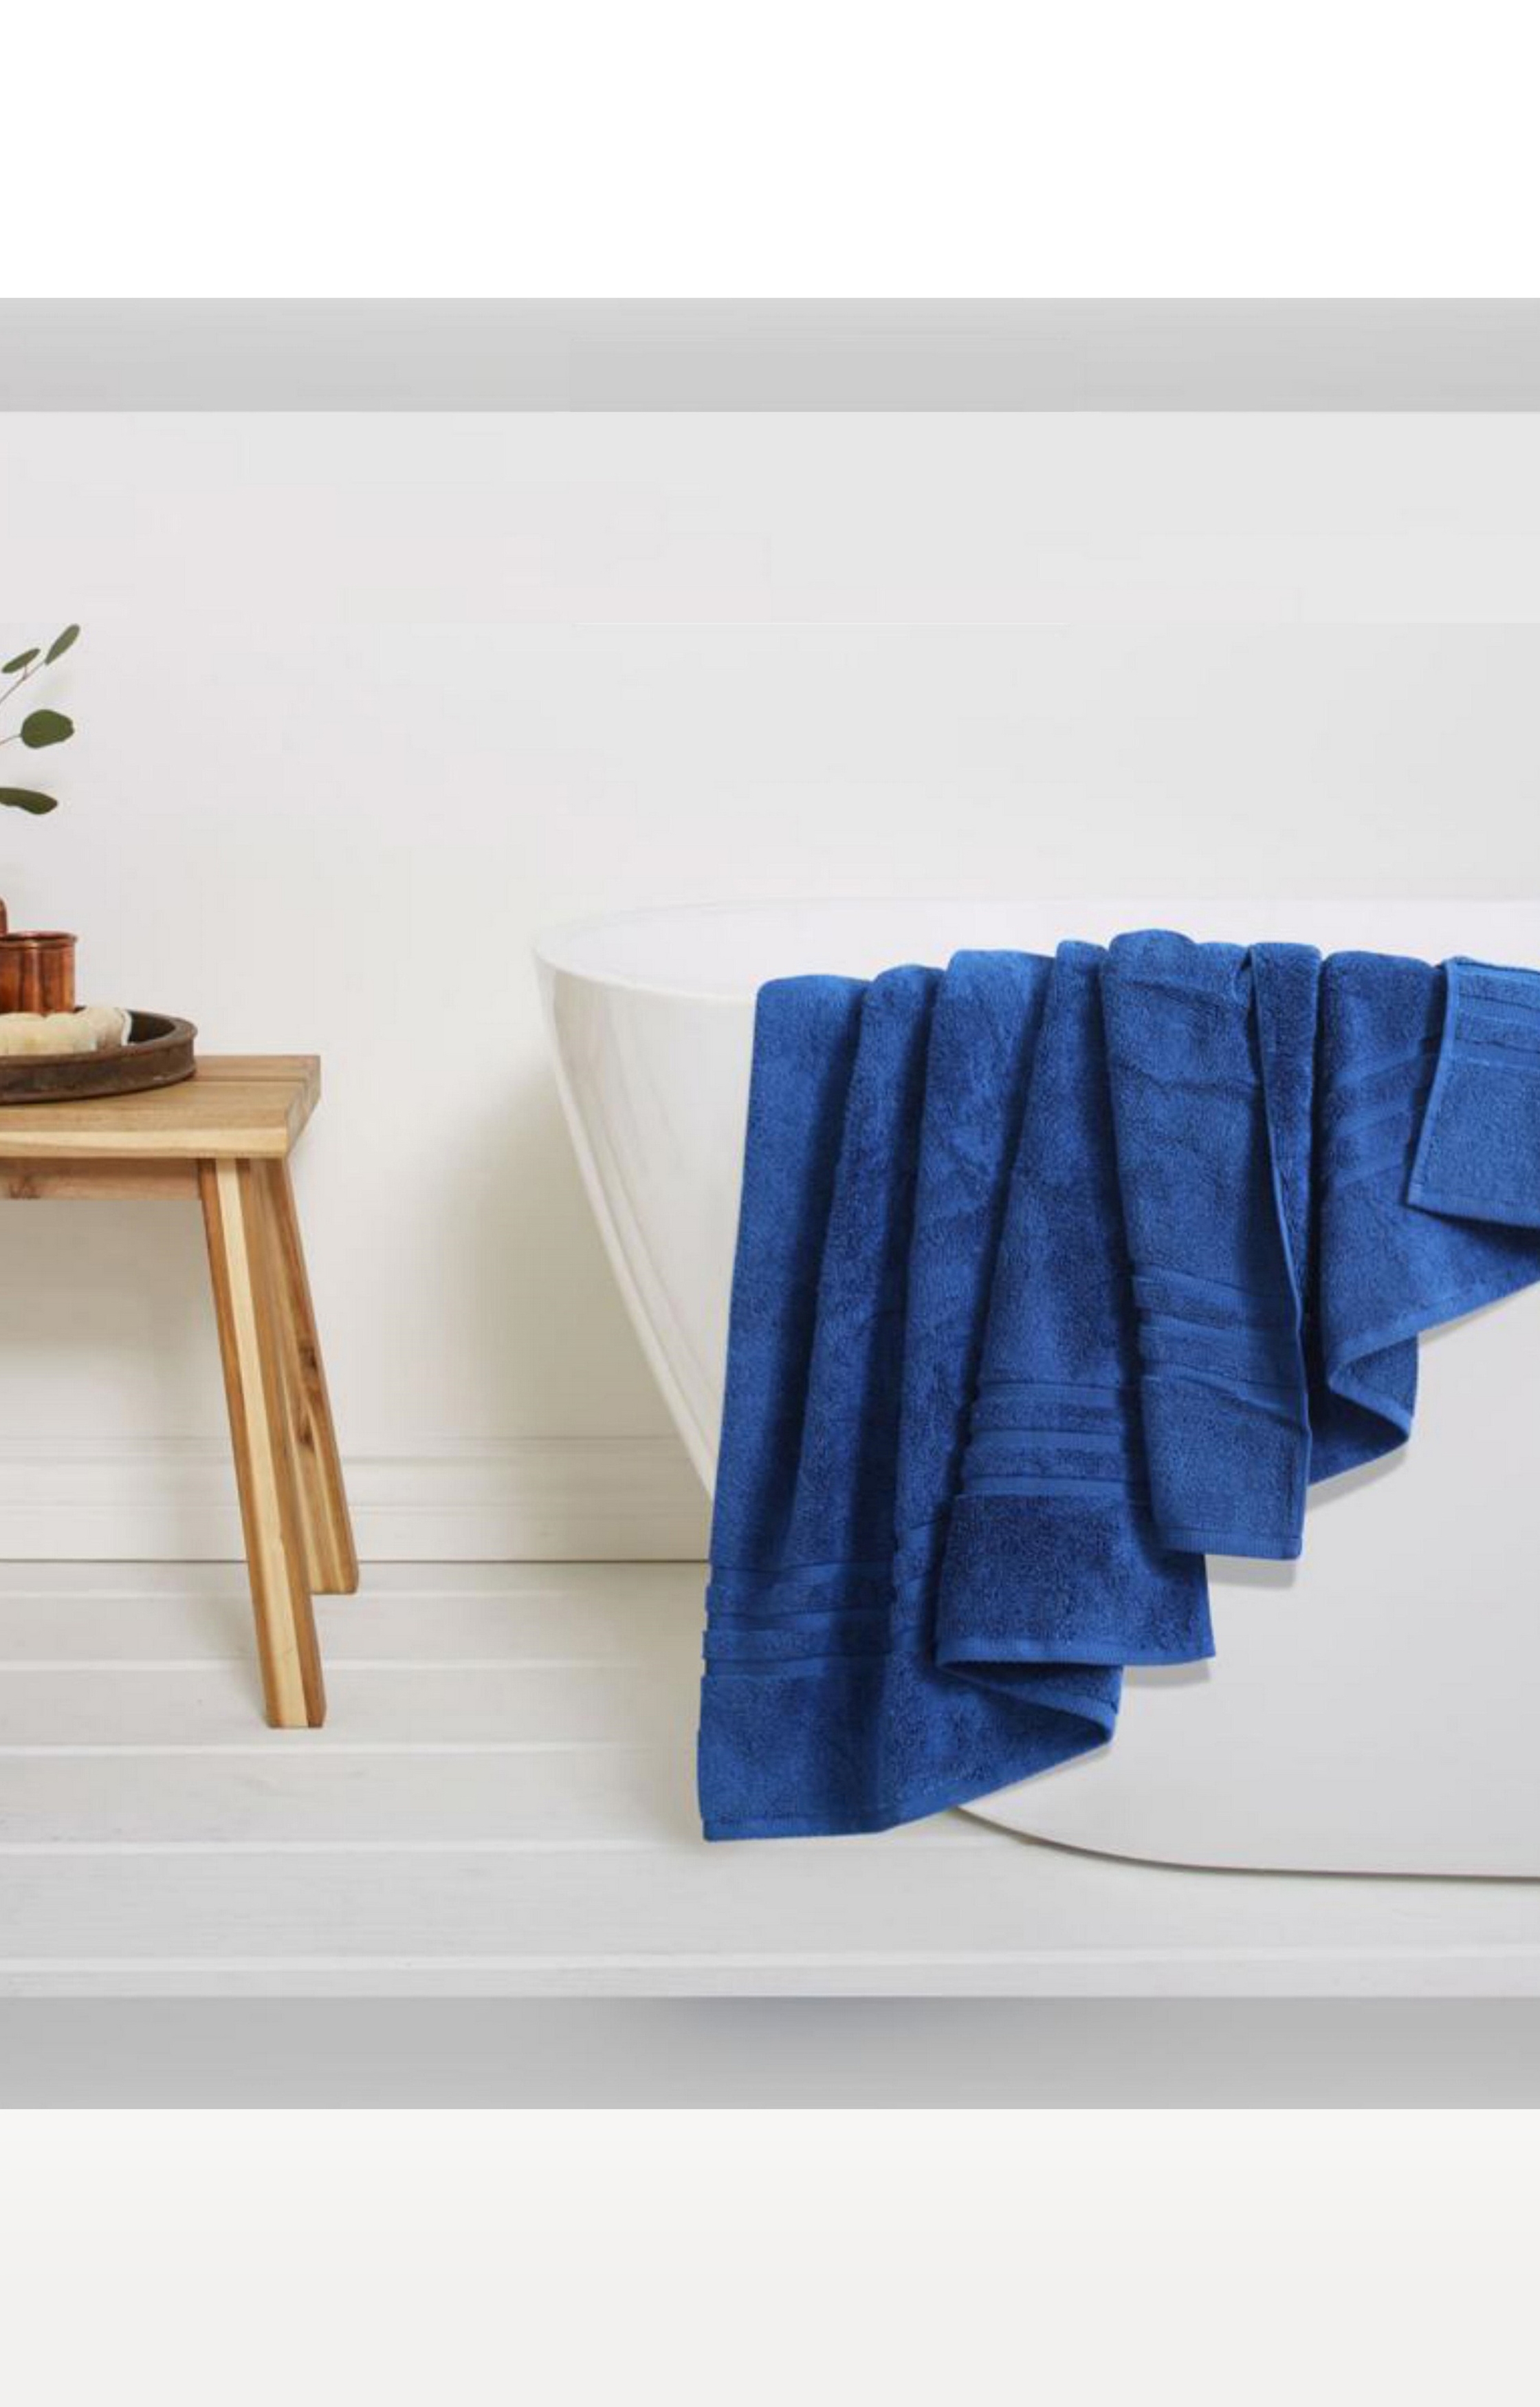 Sita Fabrics | Sita Fabrics Premium Cotton Super Soft Zero Twist Yarn Very Airy 600 GSM Bath Towel - Blue - (24x48 Inch)